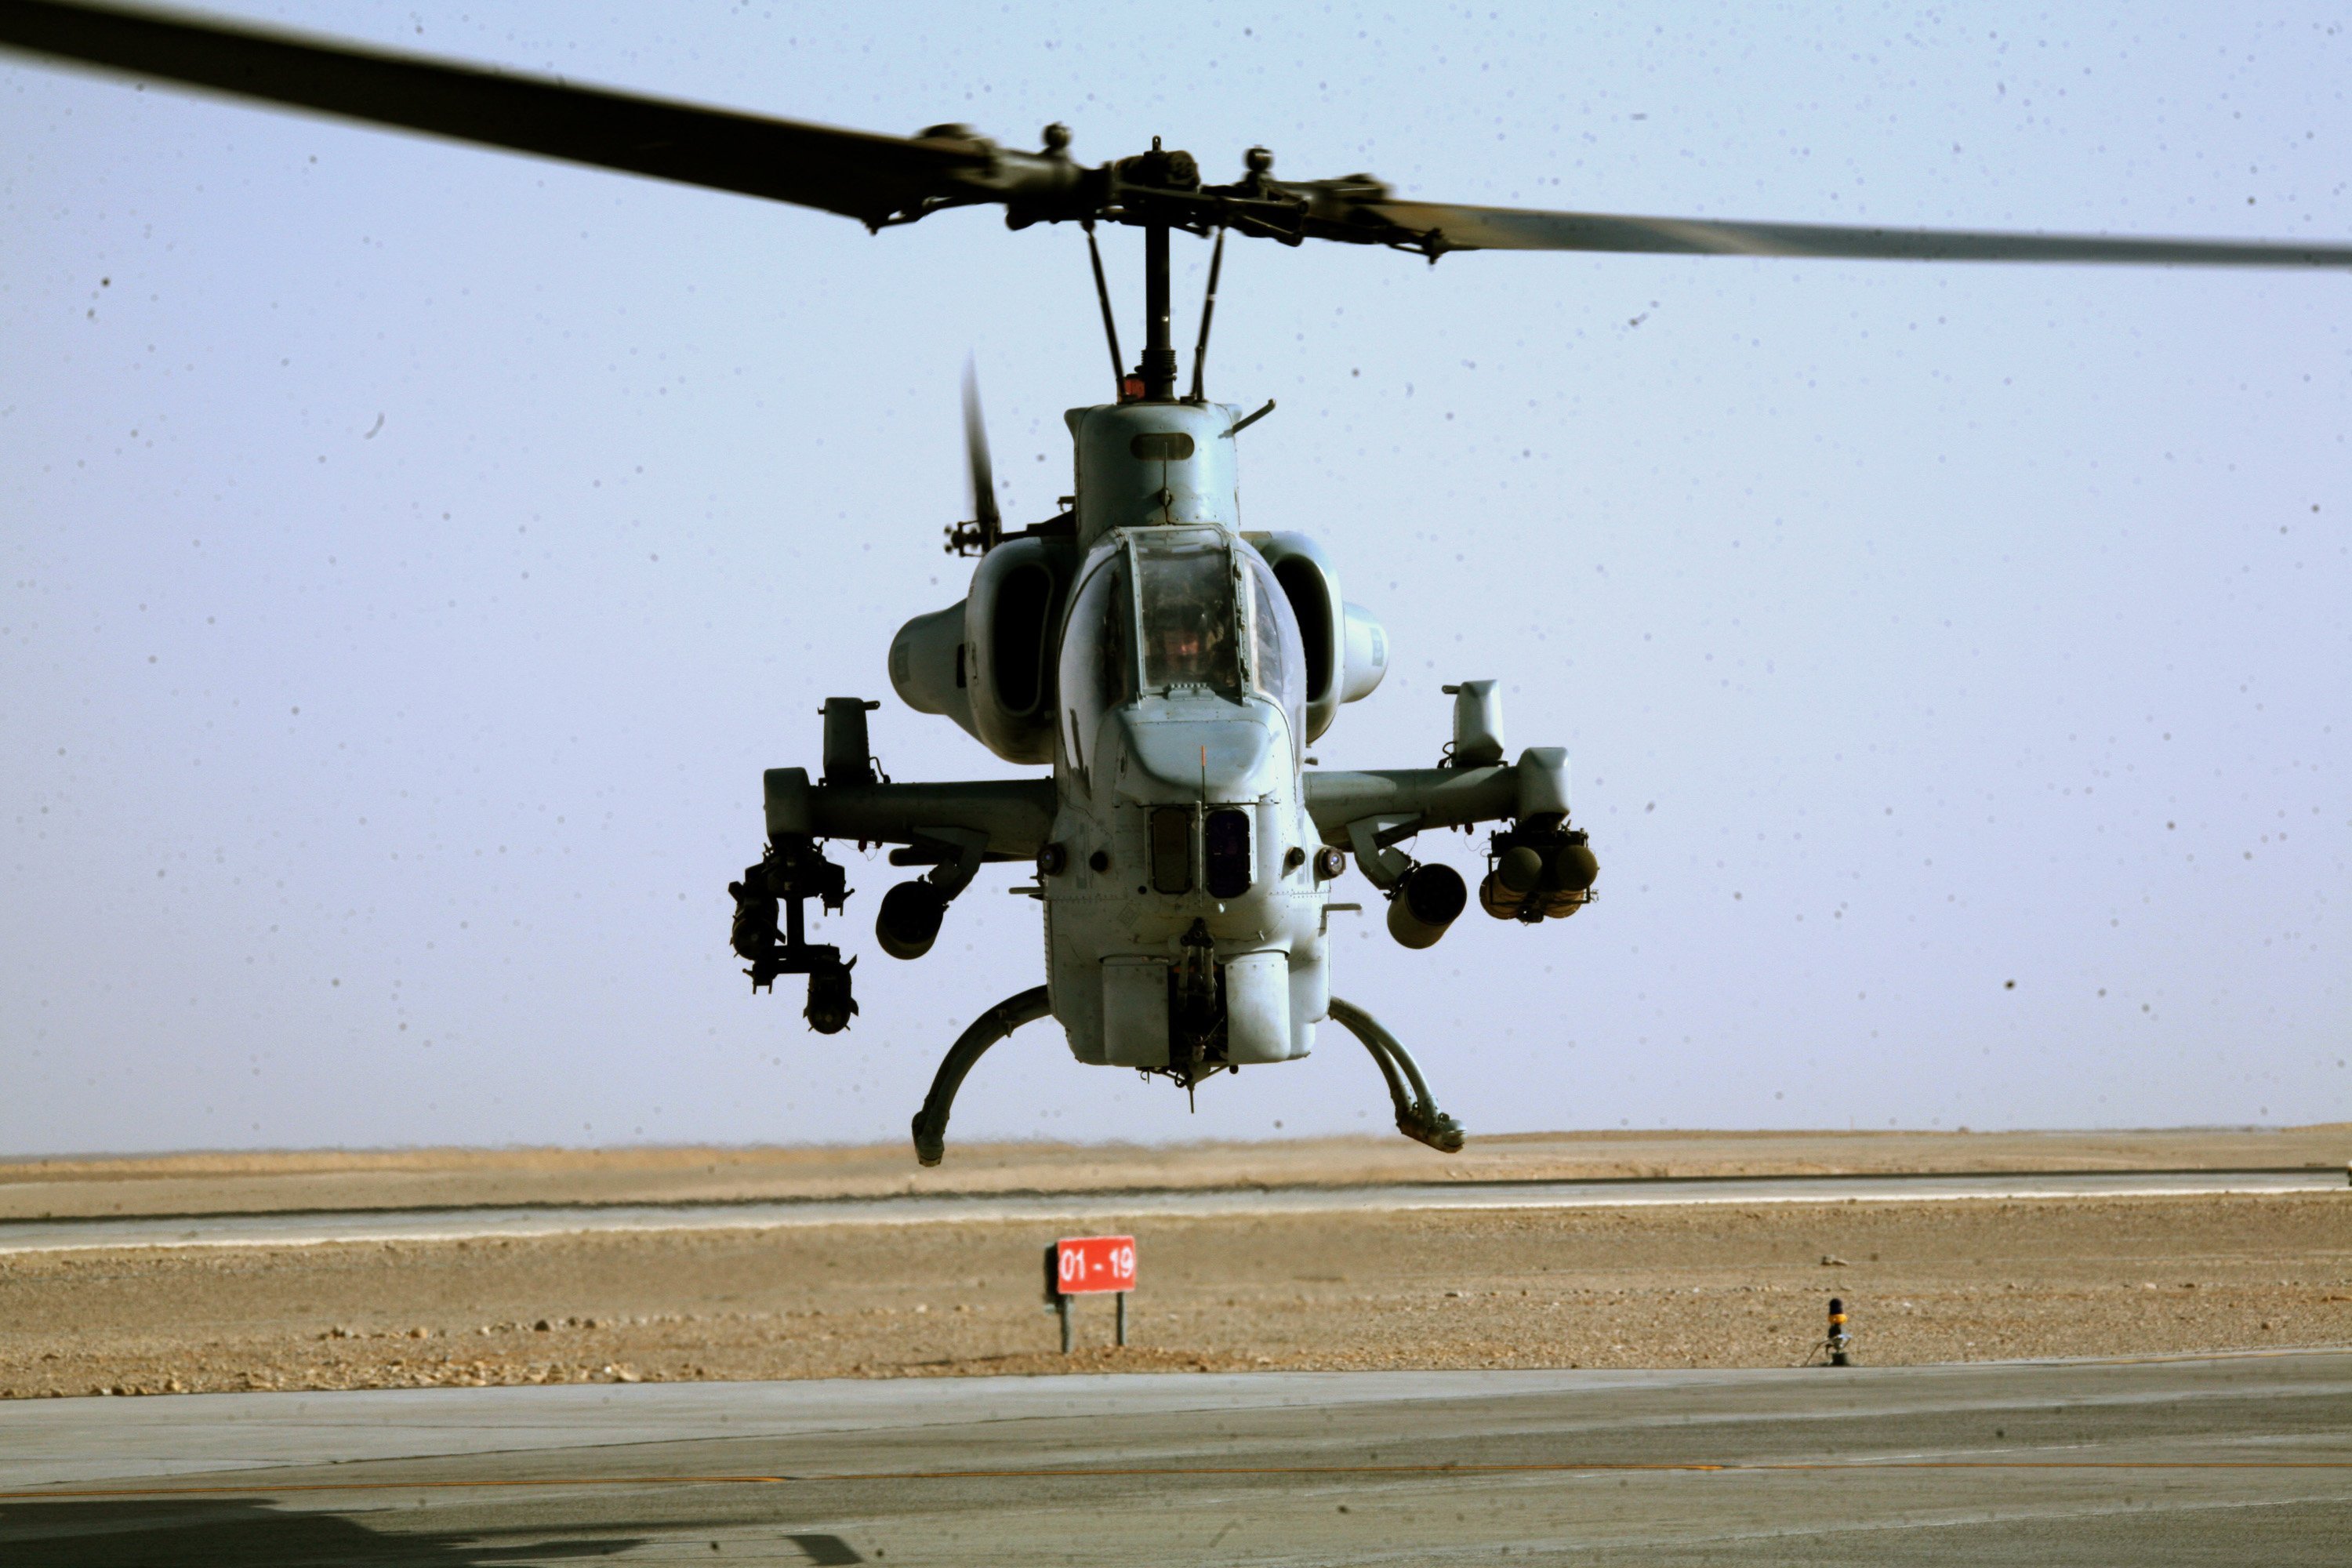 Супер кобра. Вертолет Ah-1w "супер Кобра". Вертолет Ah-1. Ah-1 Cobra. Вертолет Bell Ah-1 Cobra.